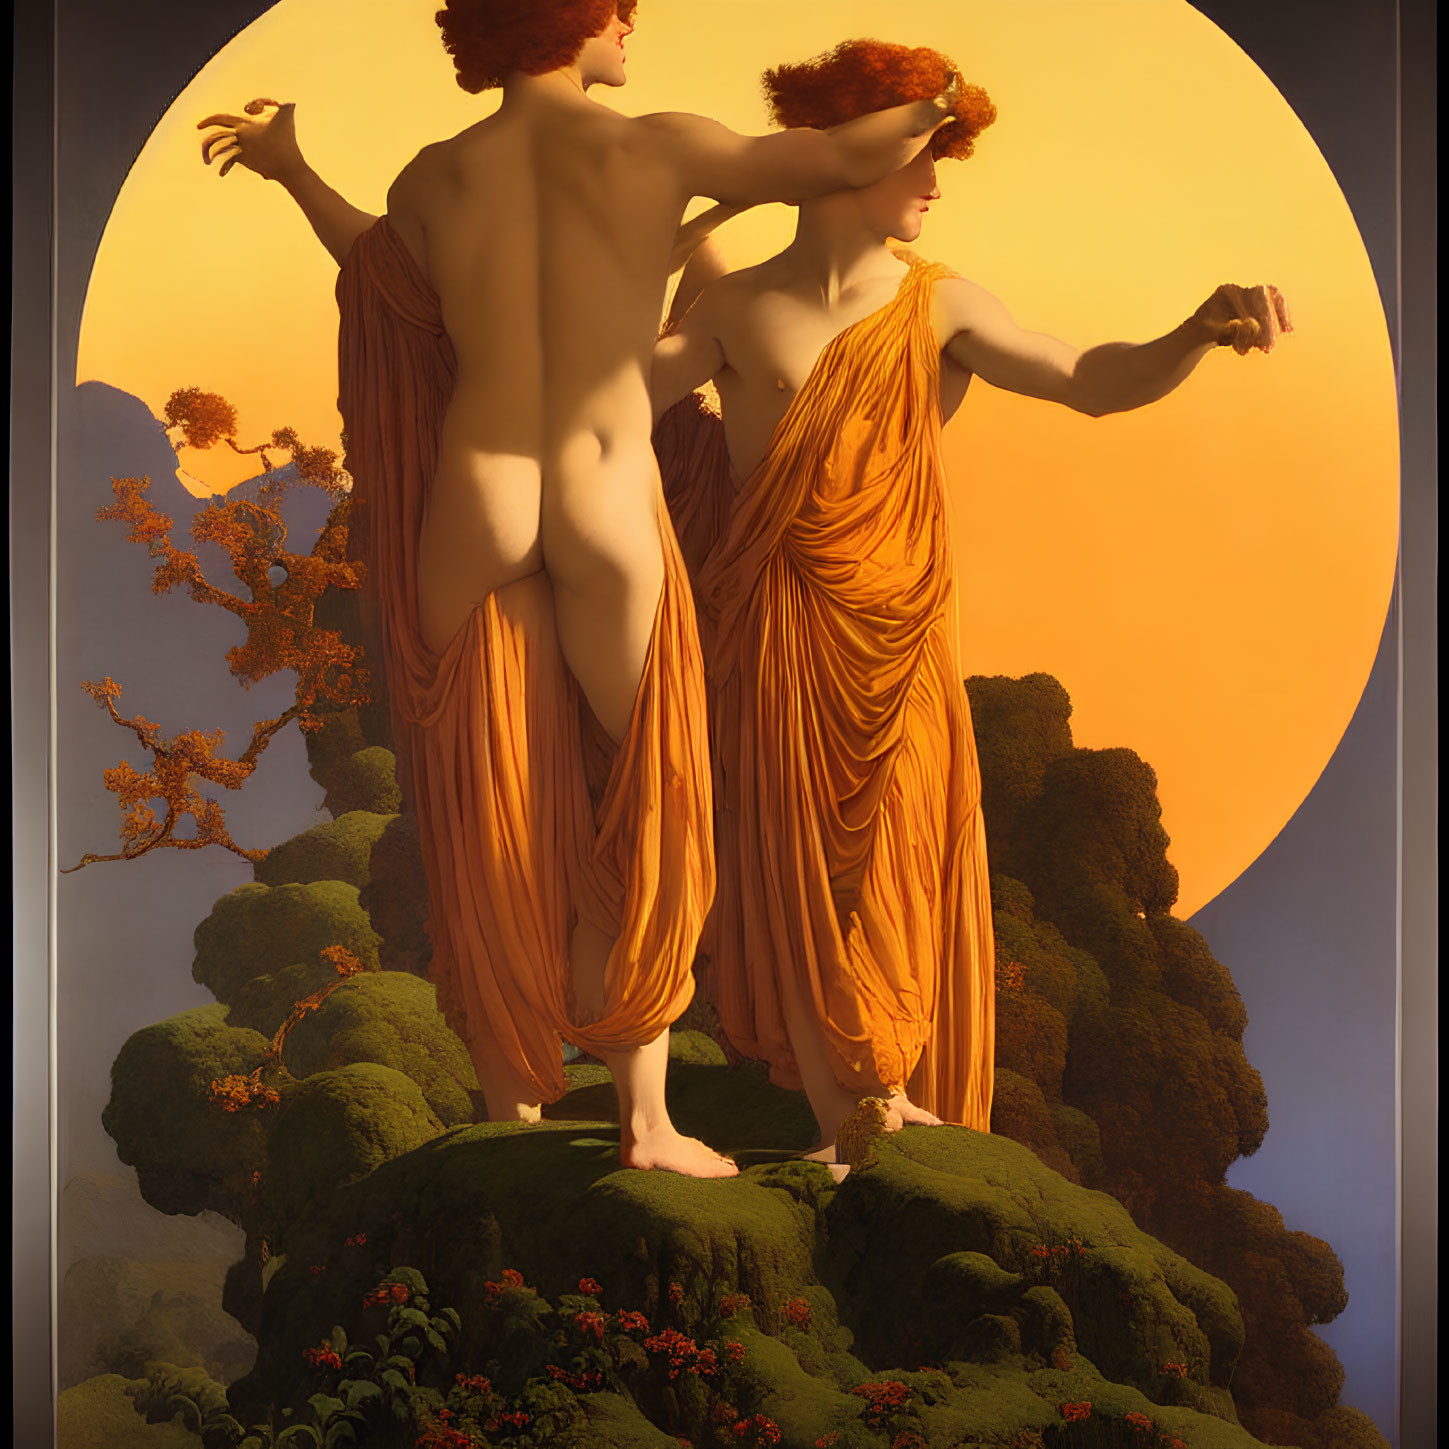 Classical figures in orange drapes on lush greenery under warm glow